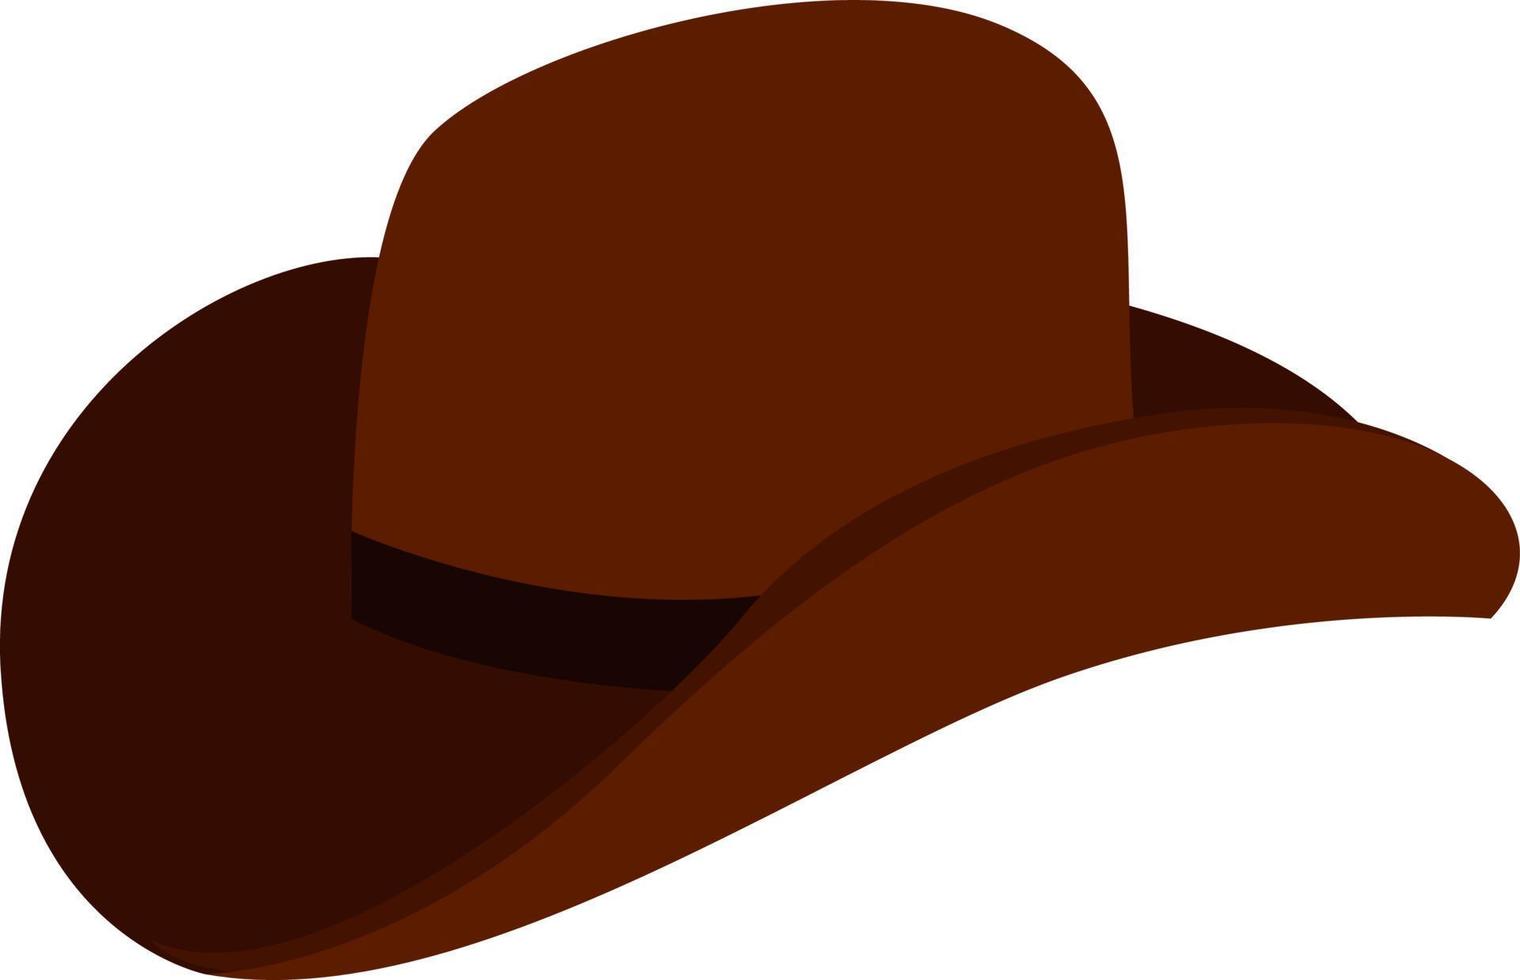 Cowboy hat, illustration, vector on white background.